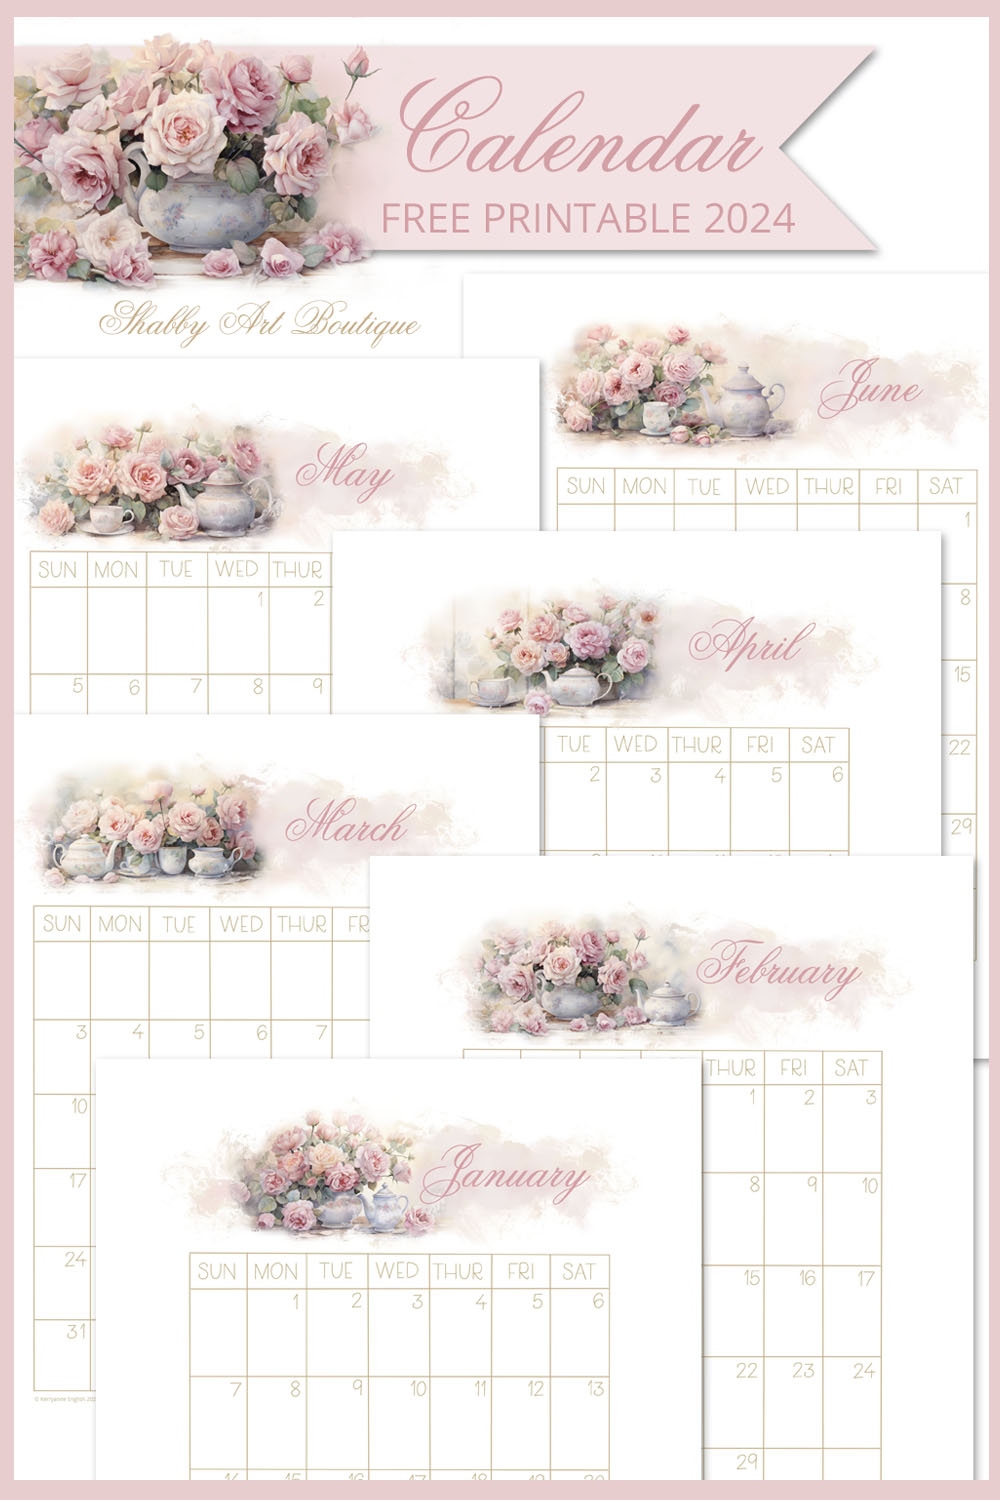 Elegant 2024 Calendar: Free Printable! - Shabby Art Boutique with Free Printable Calendar 2024 In Designs